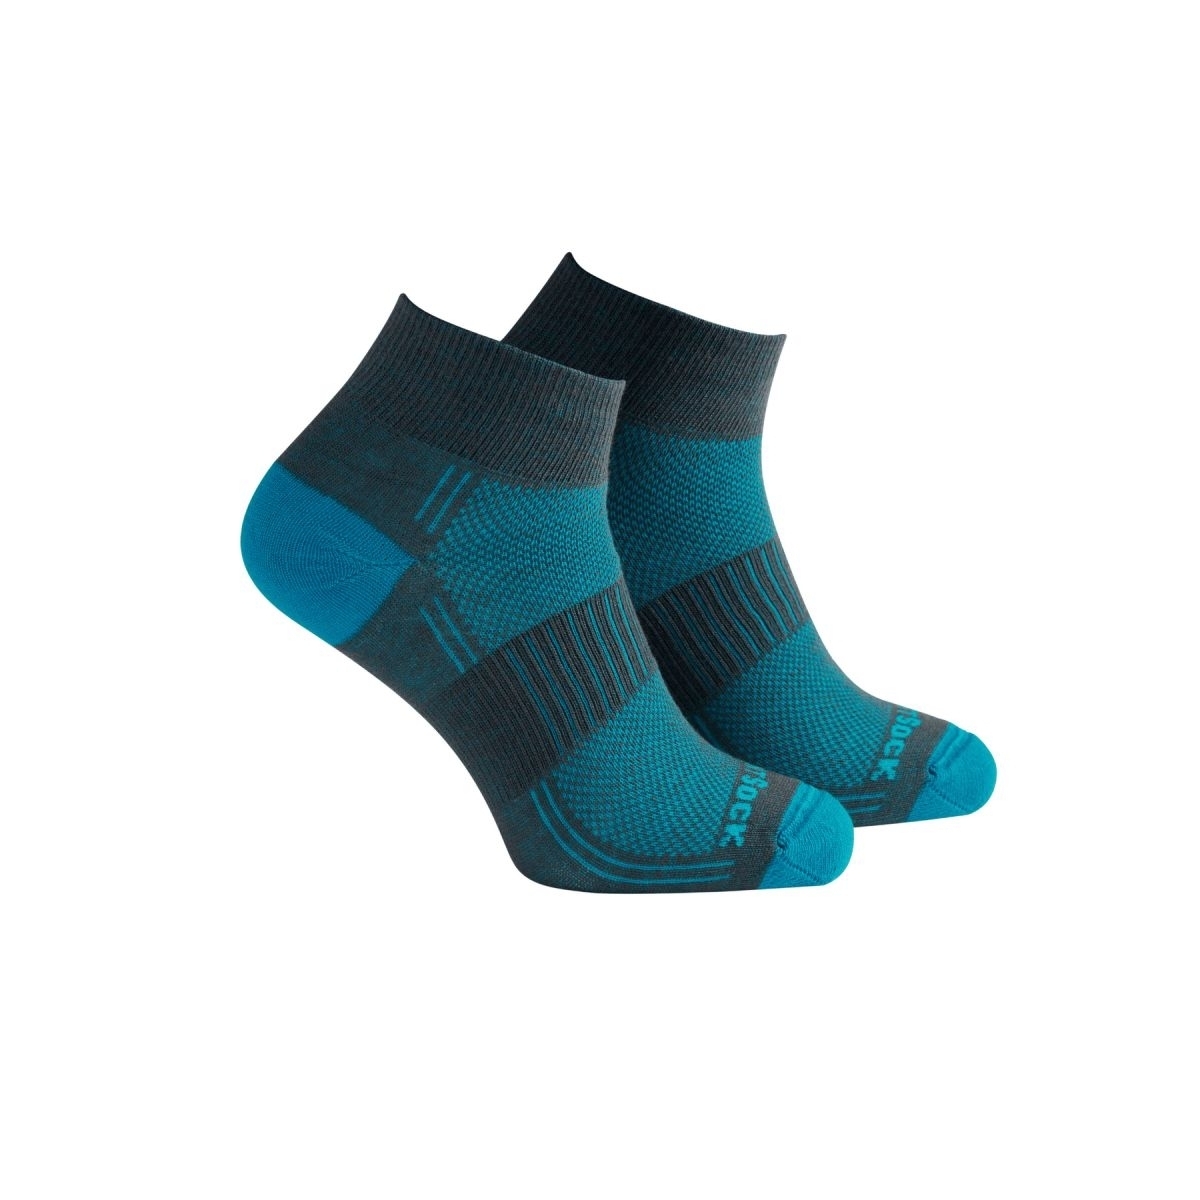 Wrightsock Unisex Coolmesh II Quarter Socks Ash/Turquoise - 805-AST Ash/Turquoise - Ash/Turquoise, S